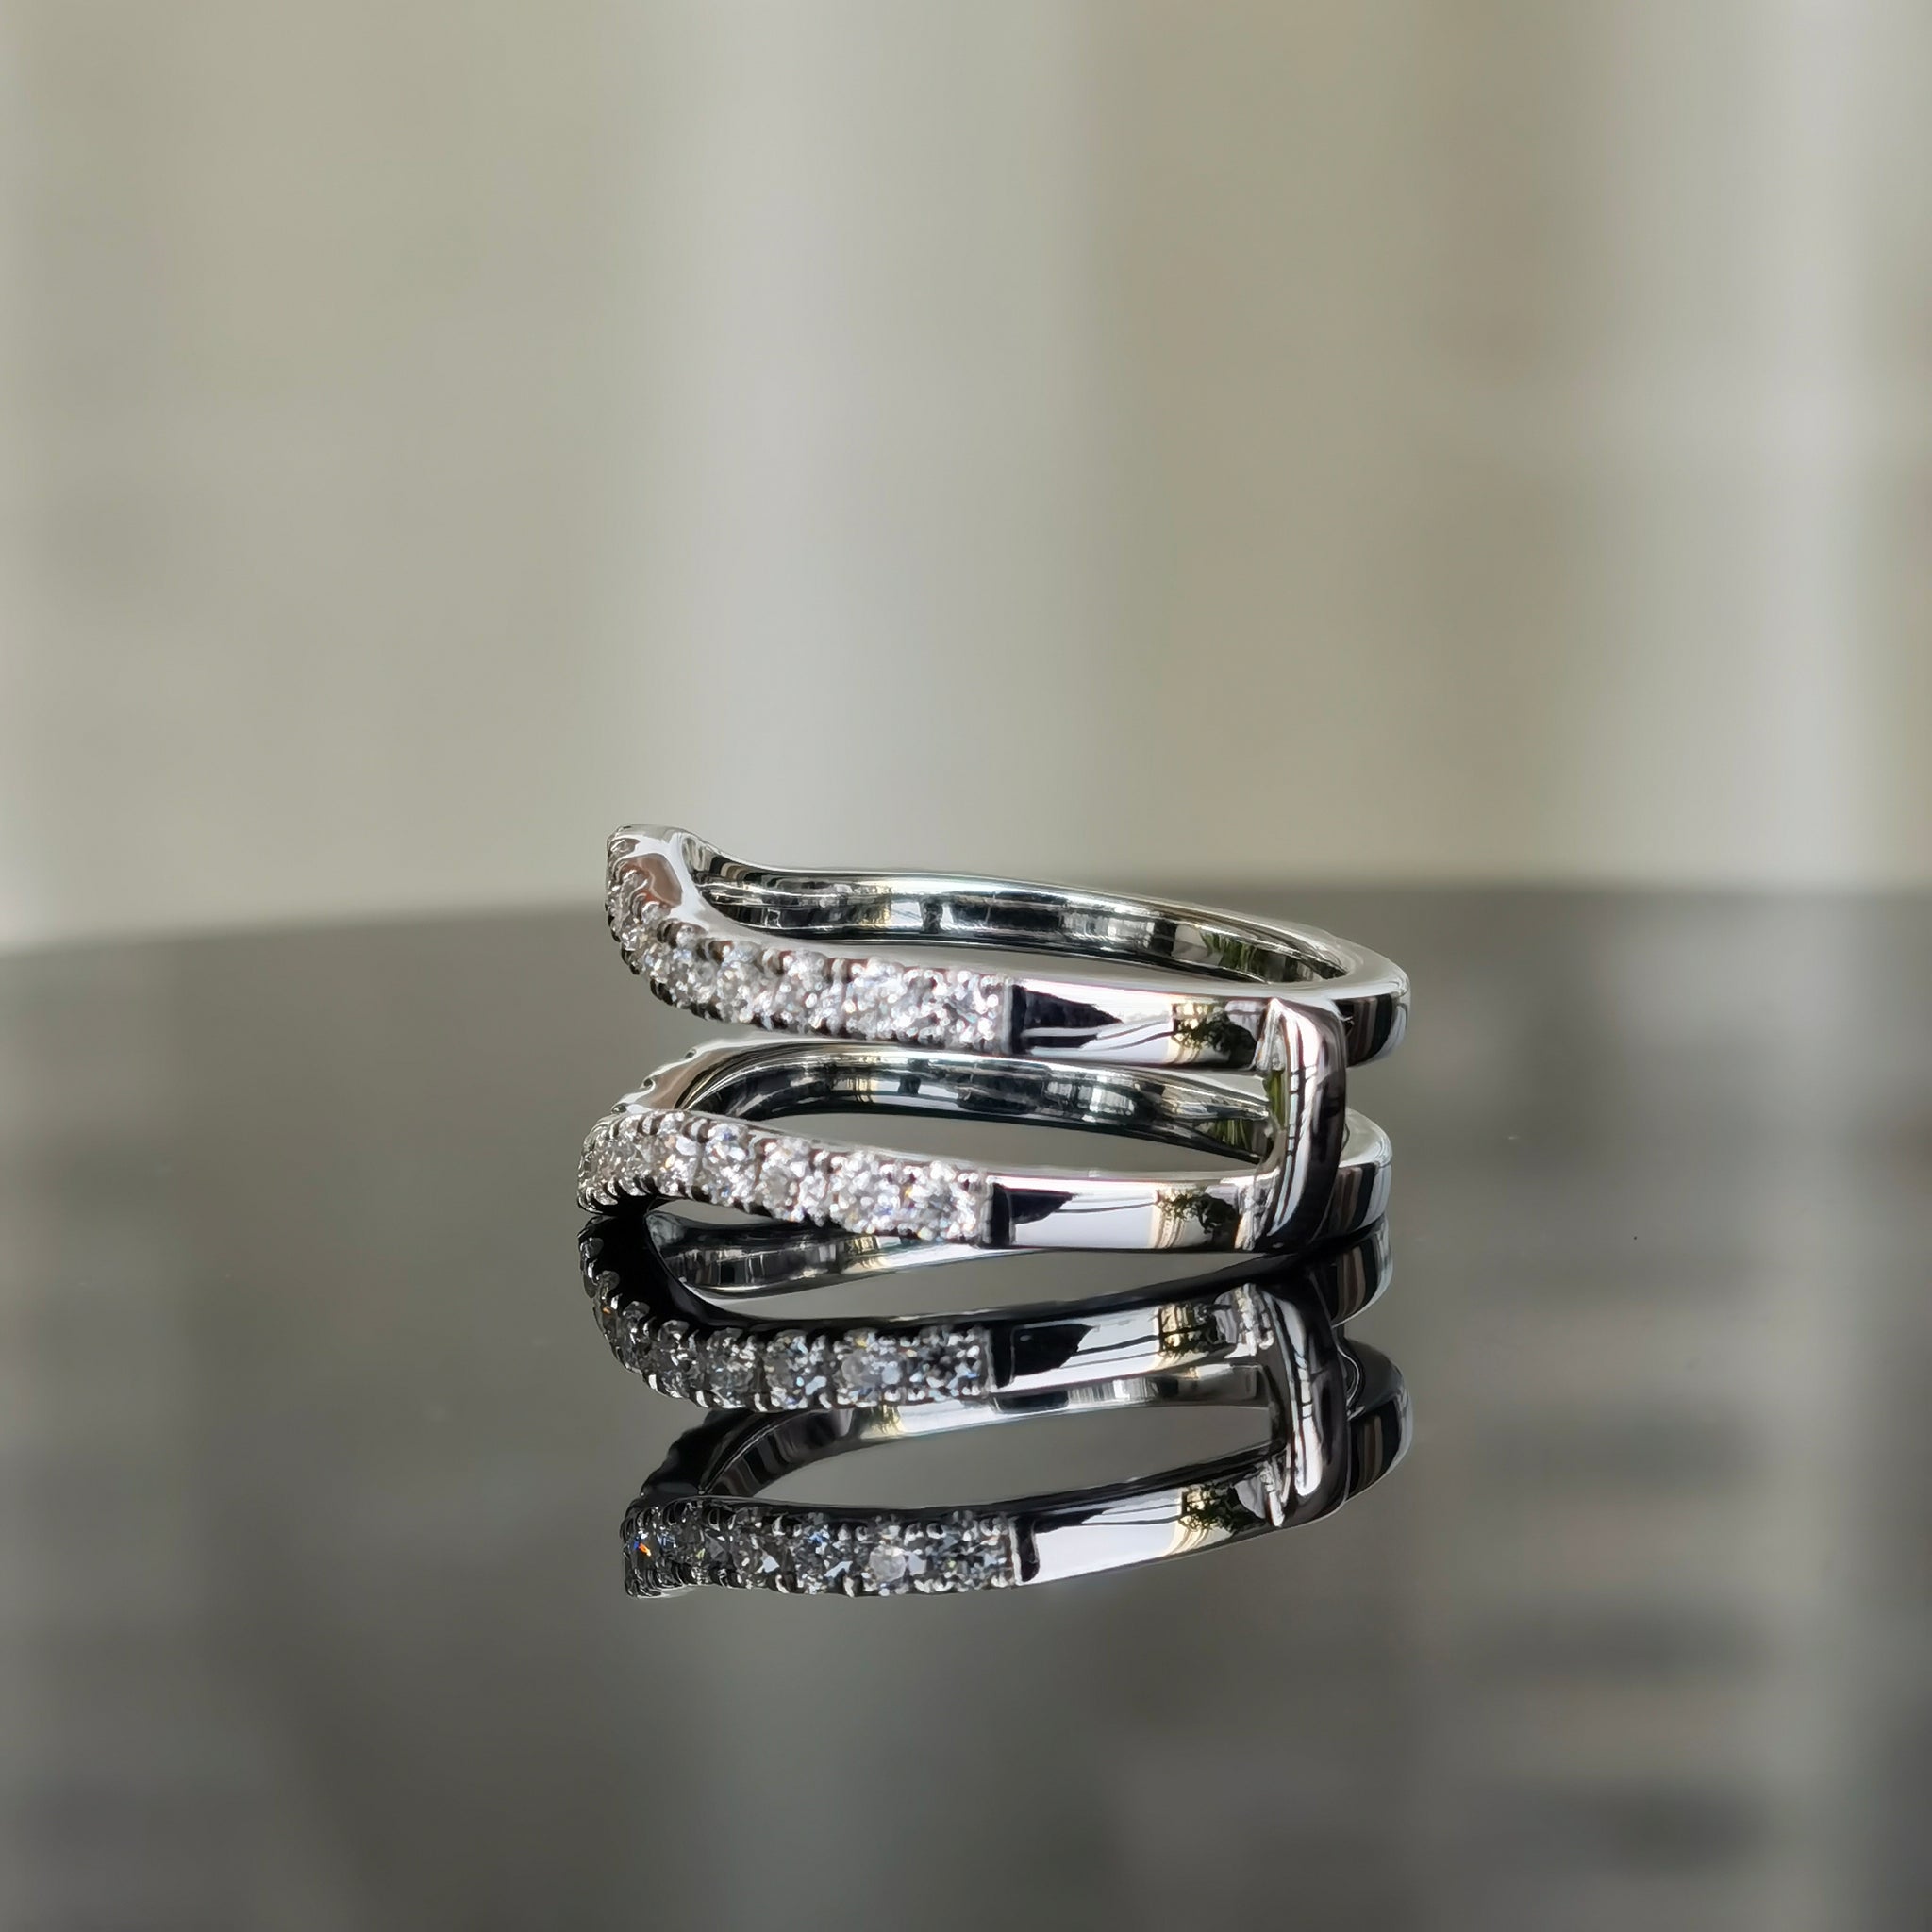 DovEggs 2 carat pear bridal set sterling silver moissanite ring